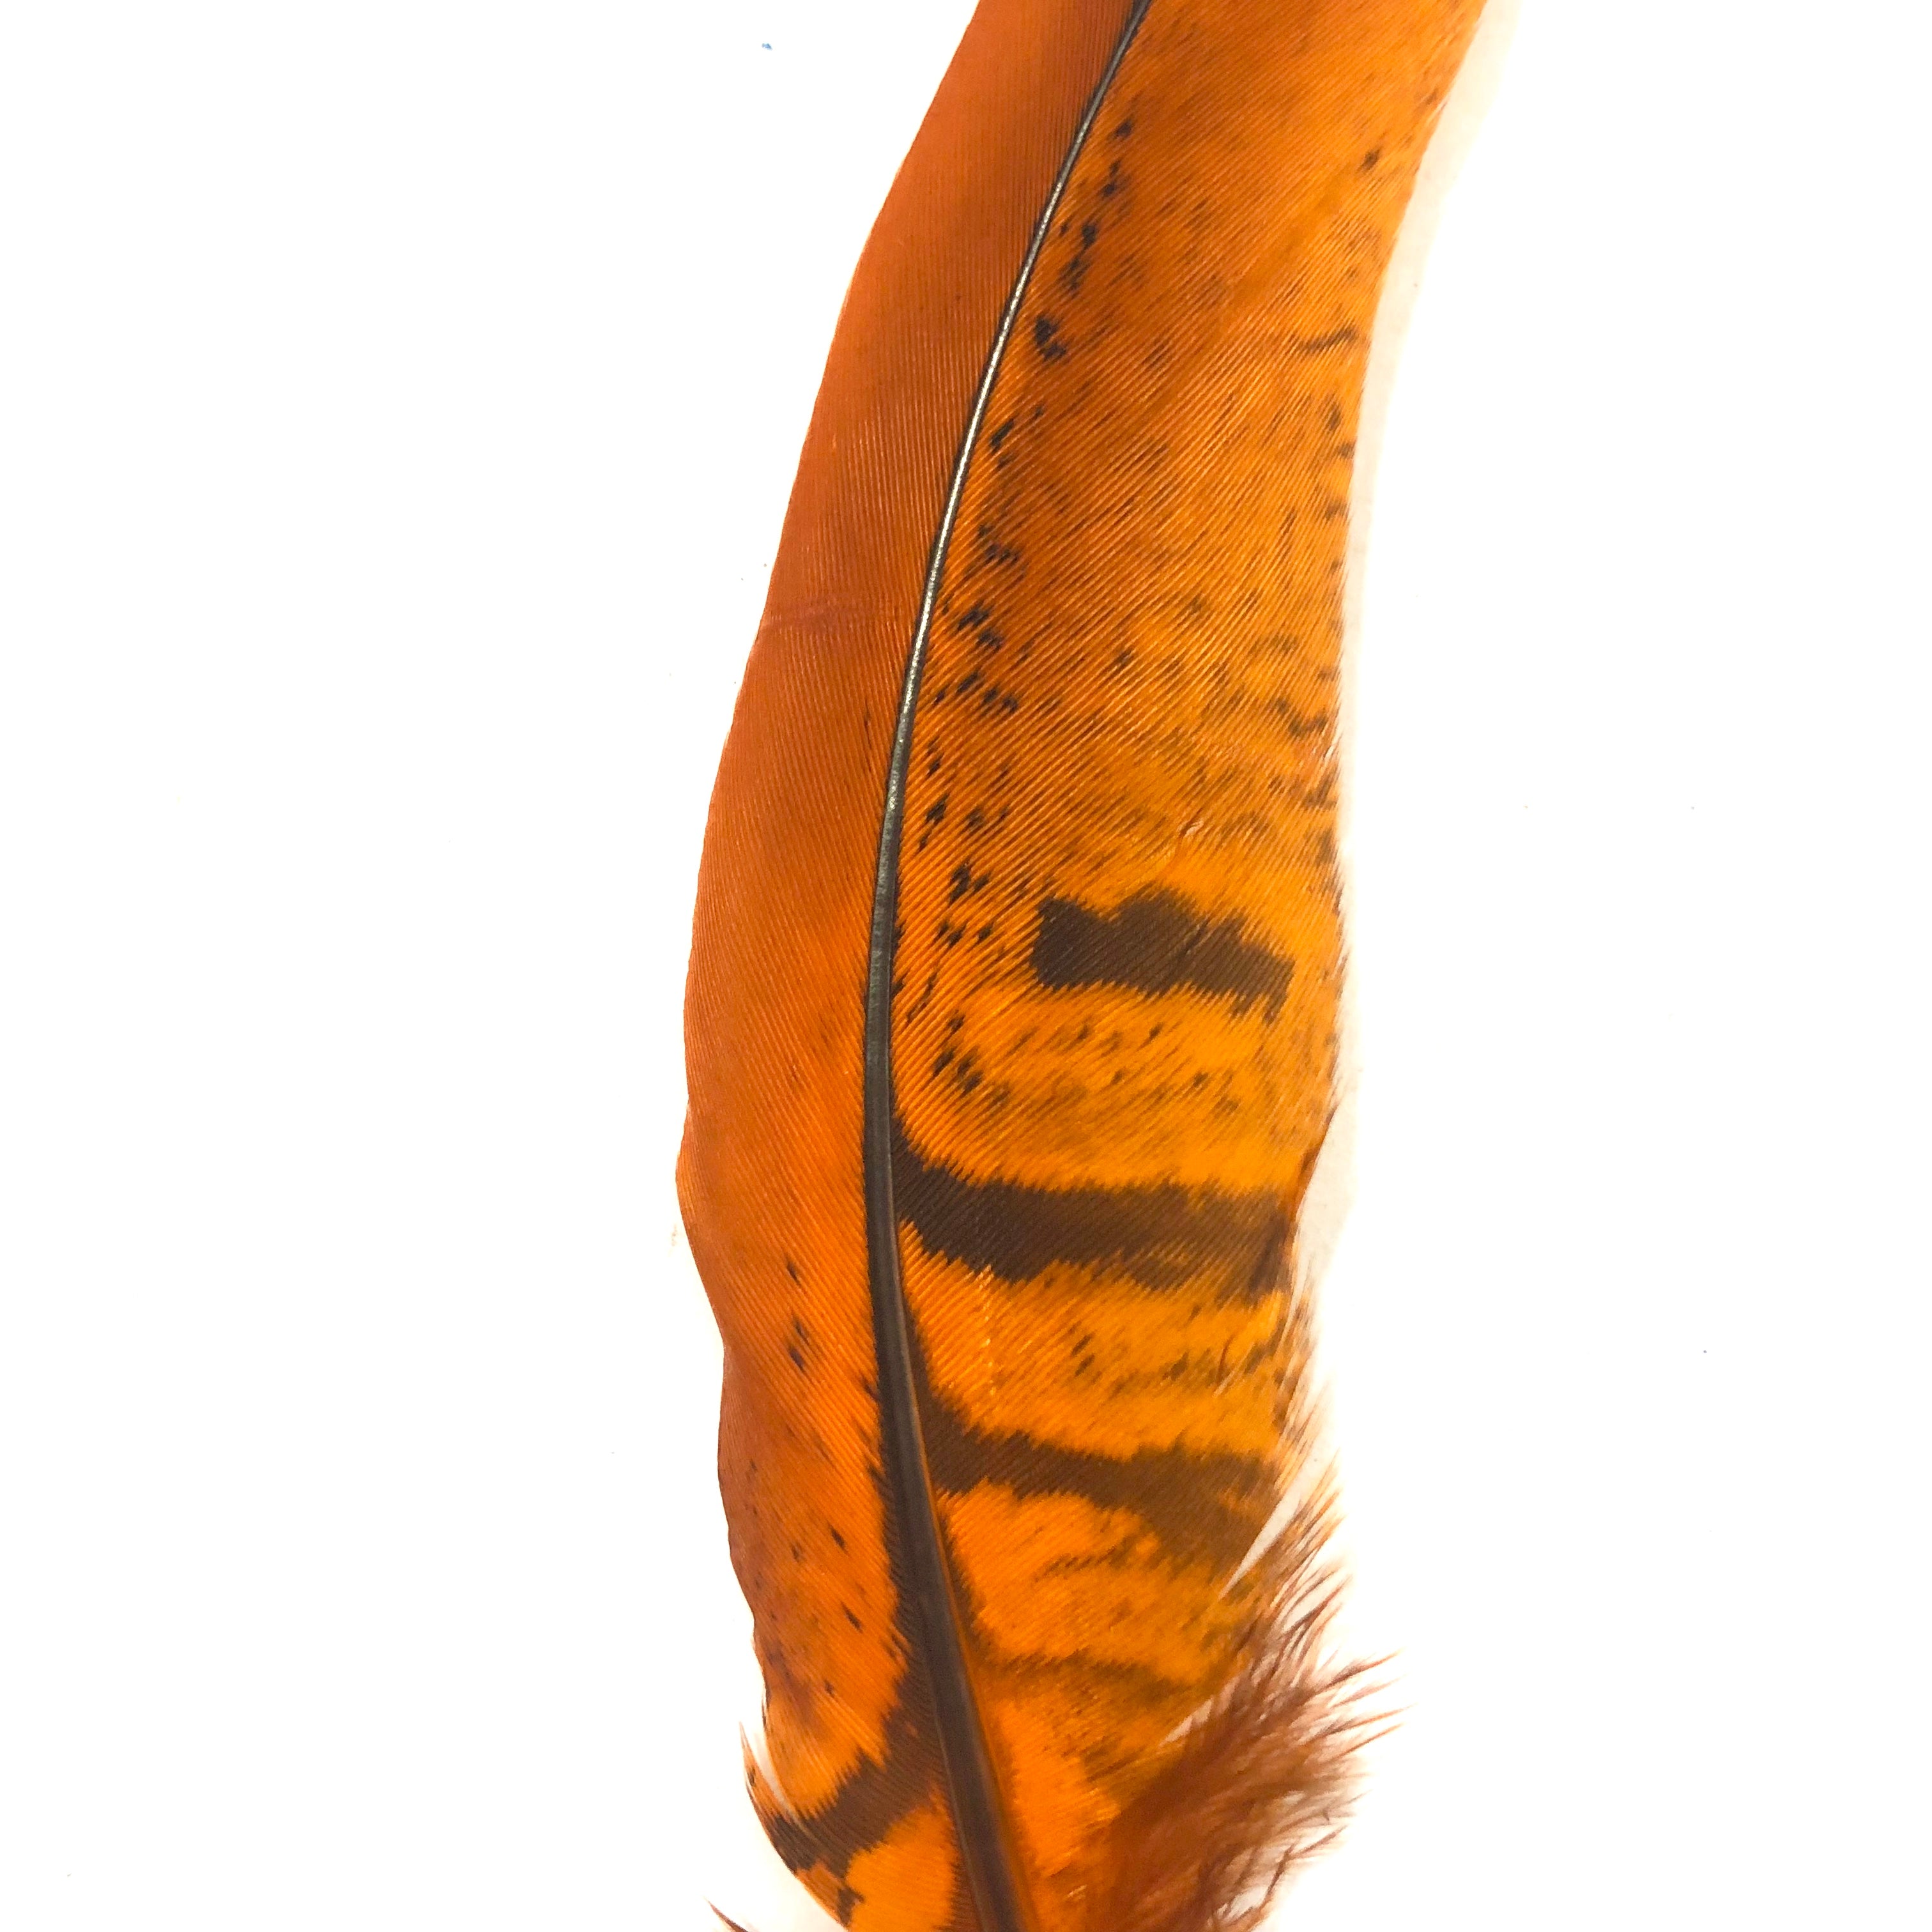 Under 6" Reeves Pheasant Tail Feather x 10 pcs - Orange